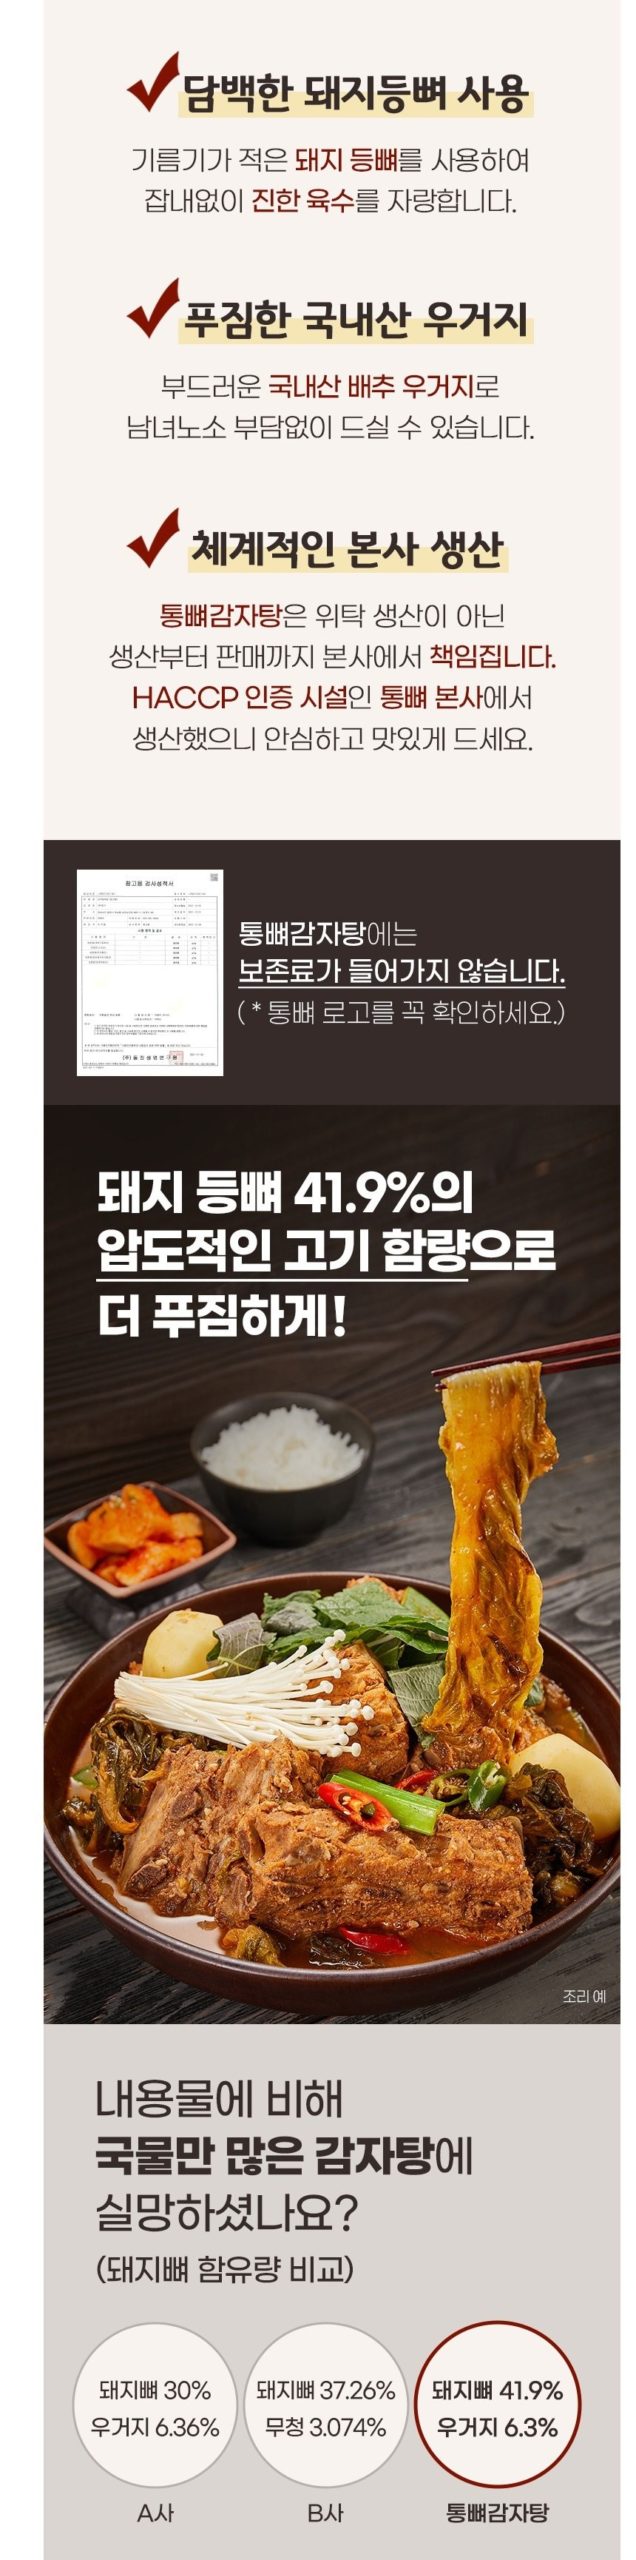 韓國食品-Tongppyeo Whole bone Gamjatang (Spicy) 1kg